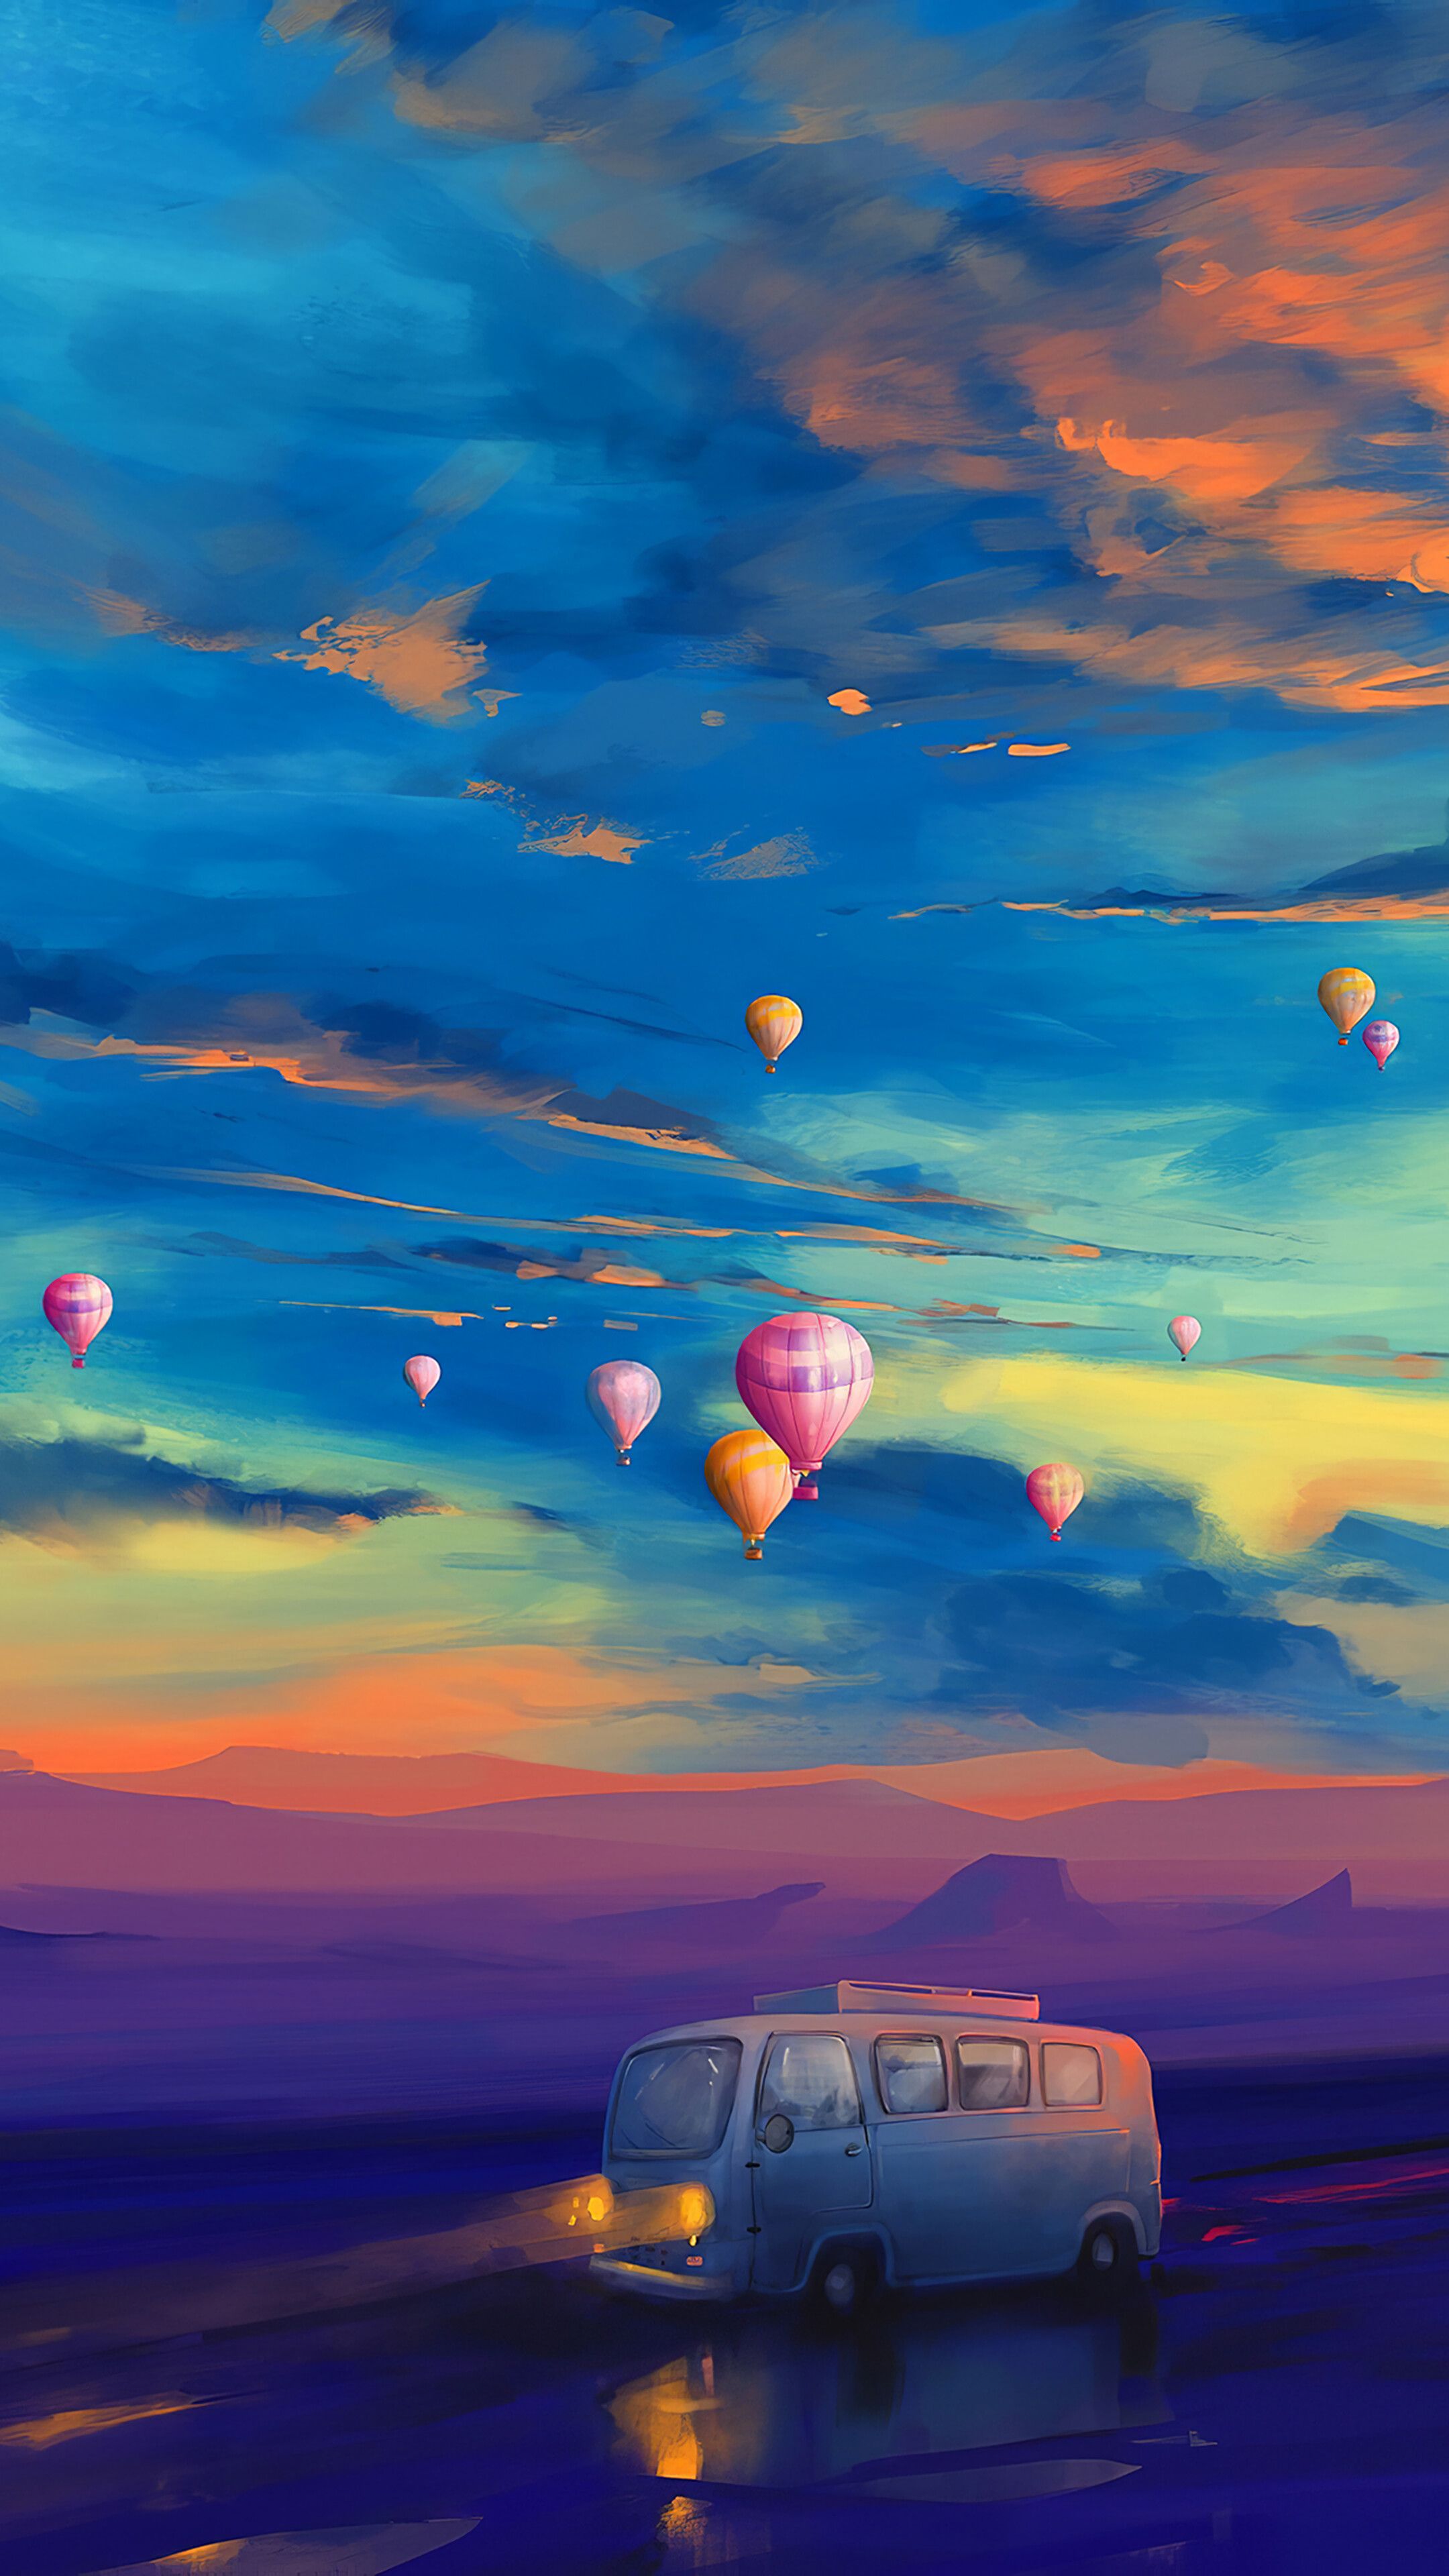 Colorful, Scenery, Van, Hot Air Balloon, Illustration